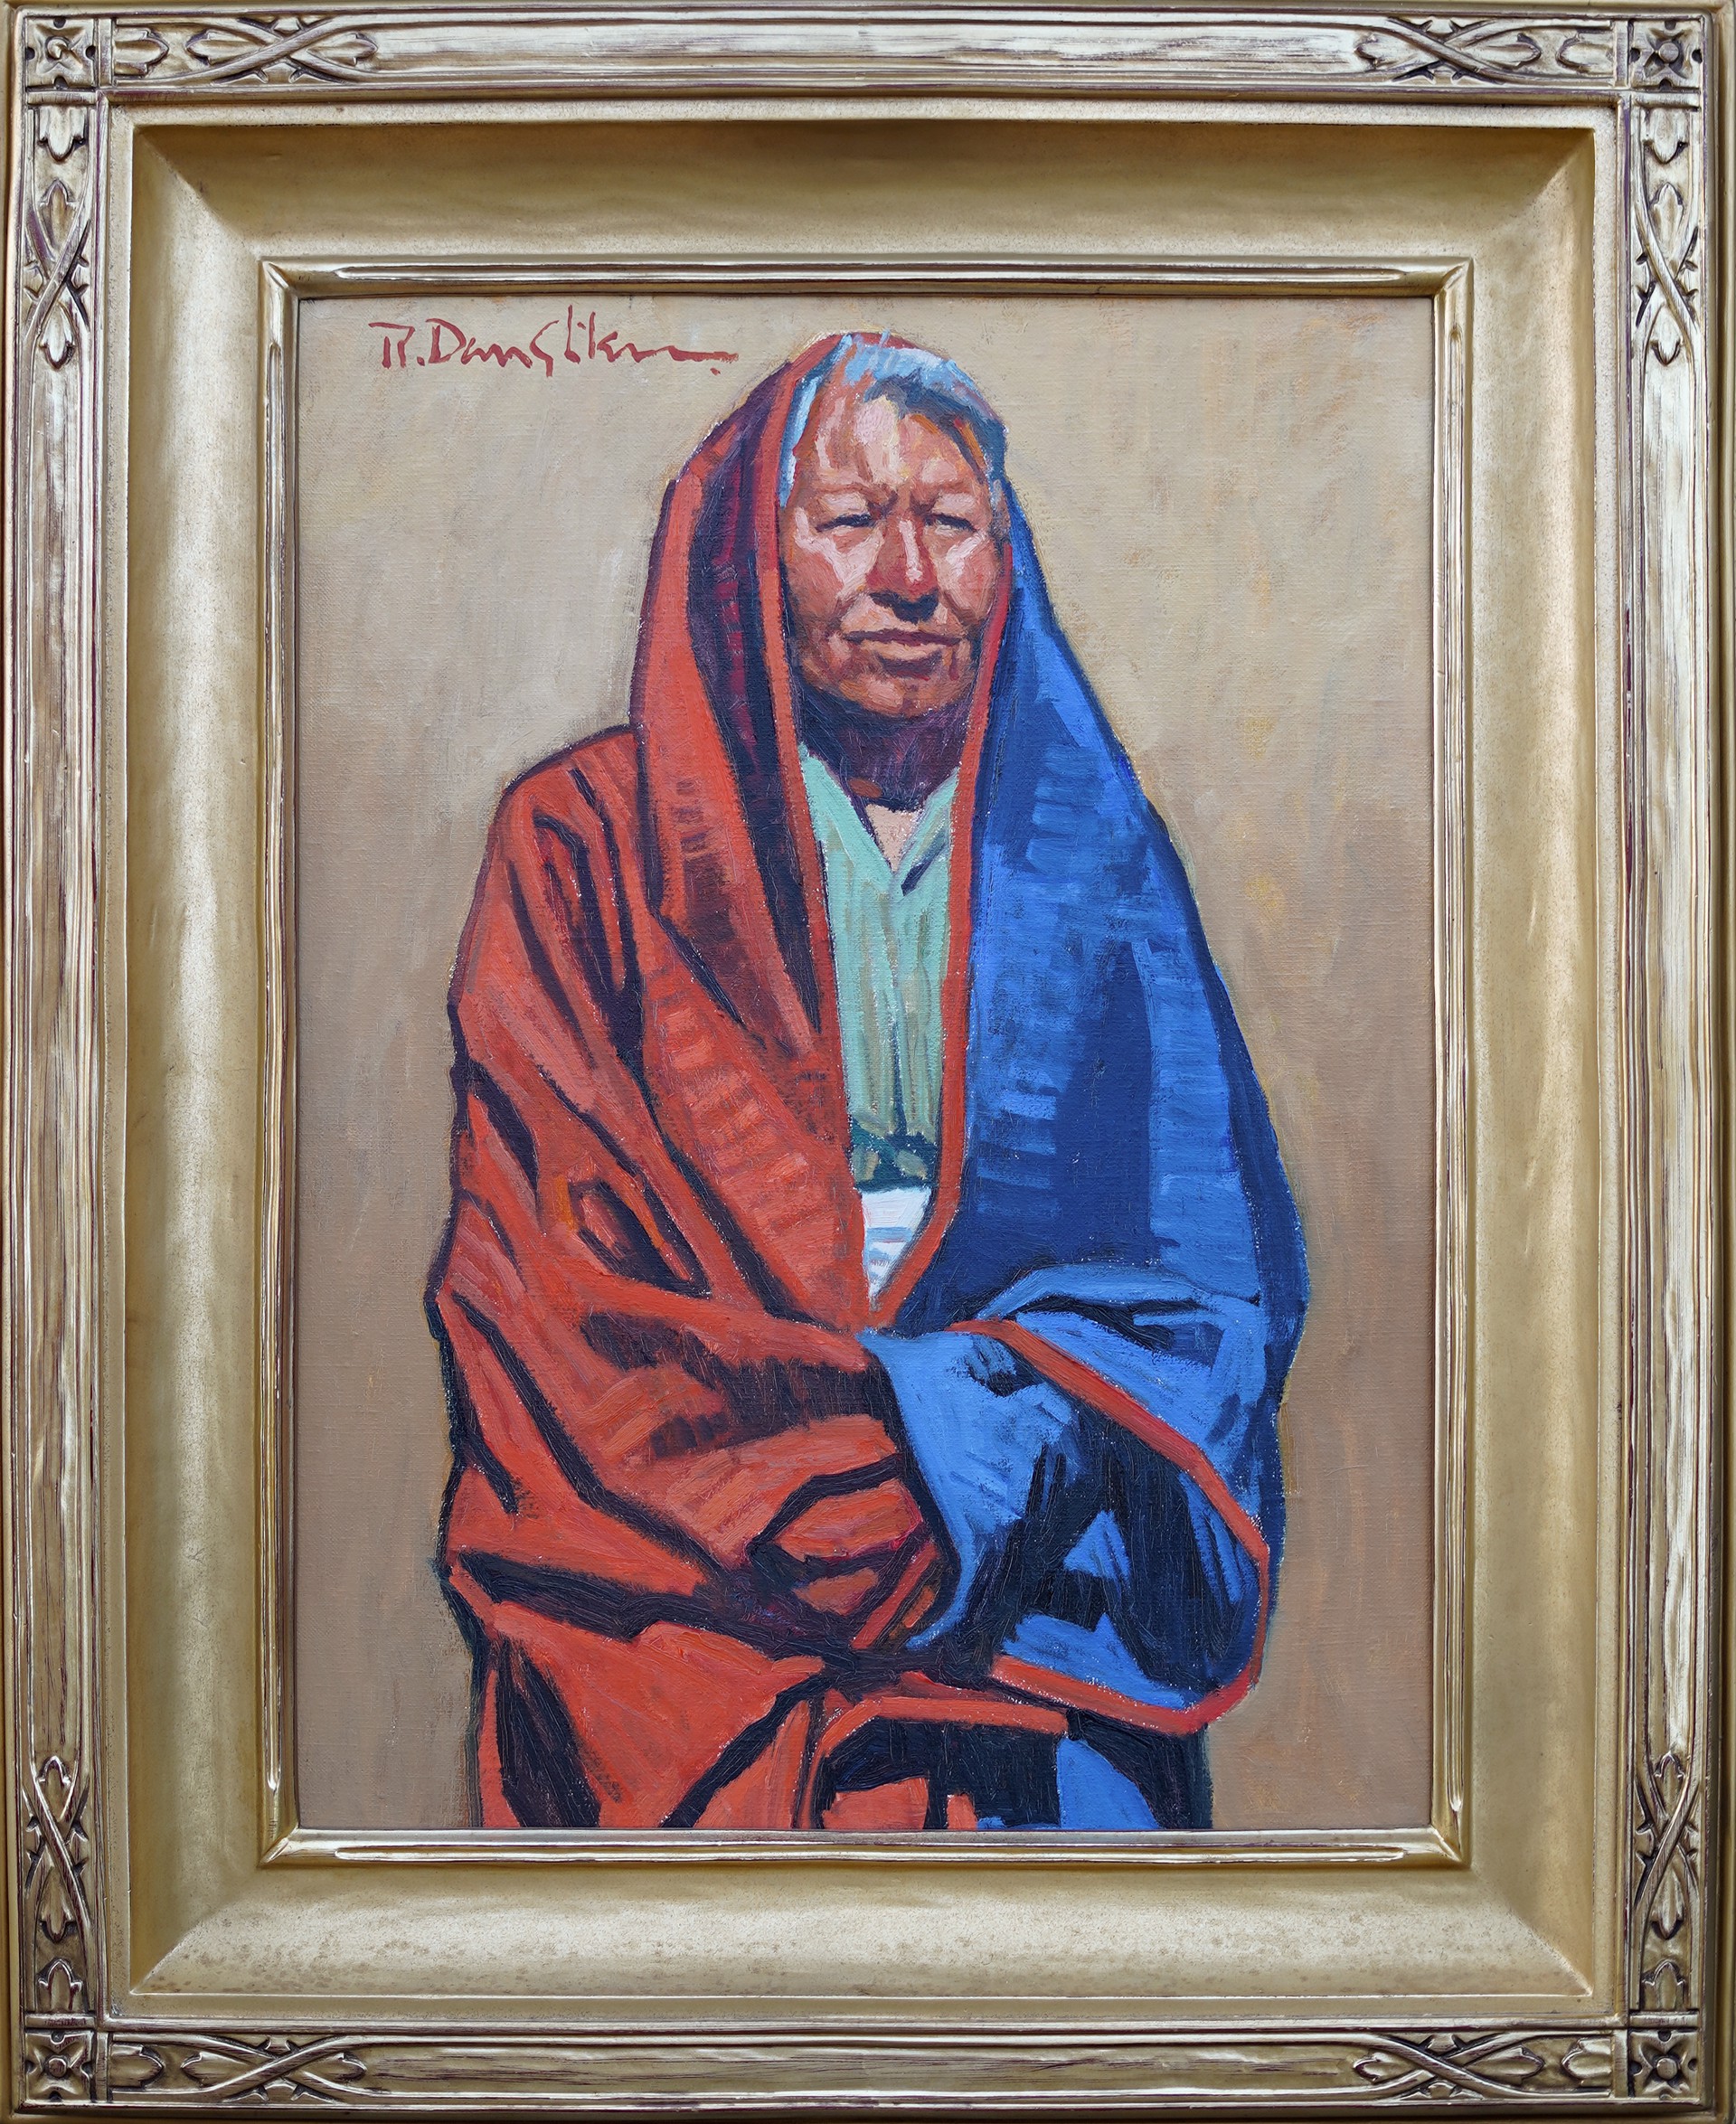 Taos Portrait by Robert Daughters (1929-2013)